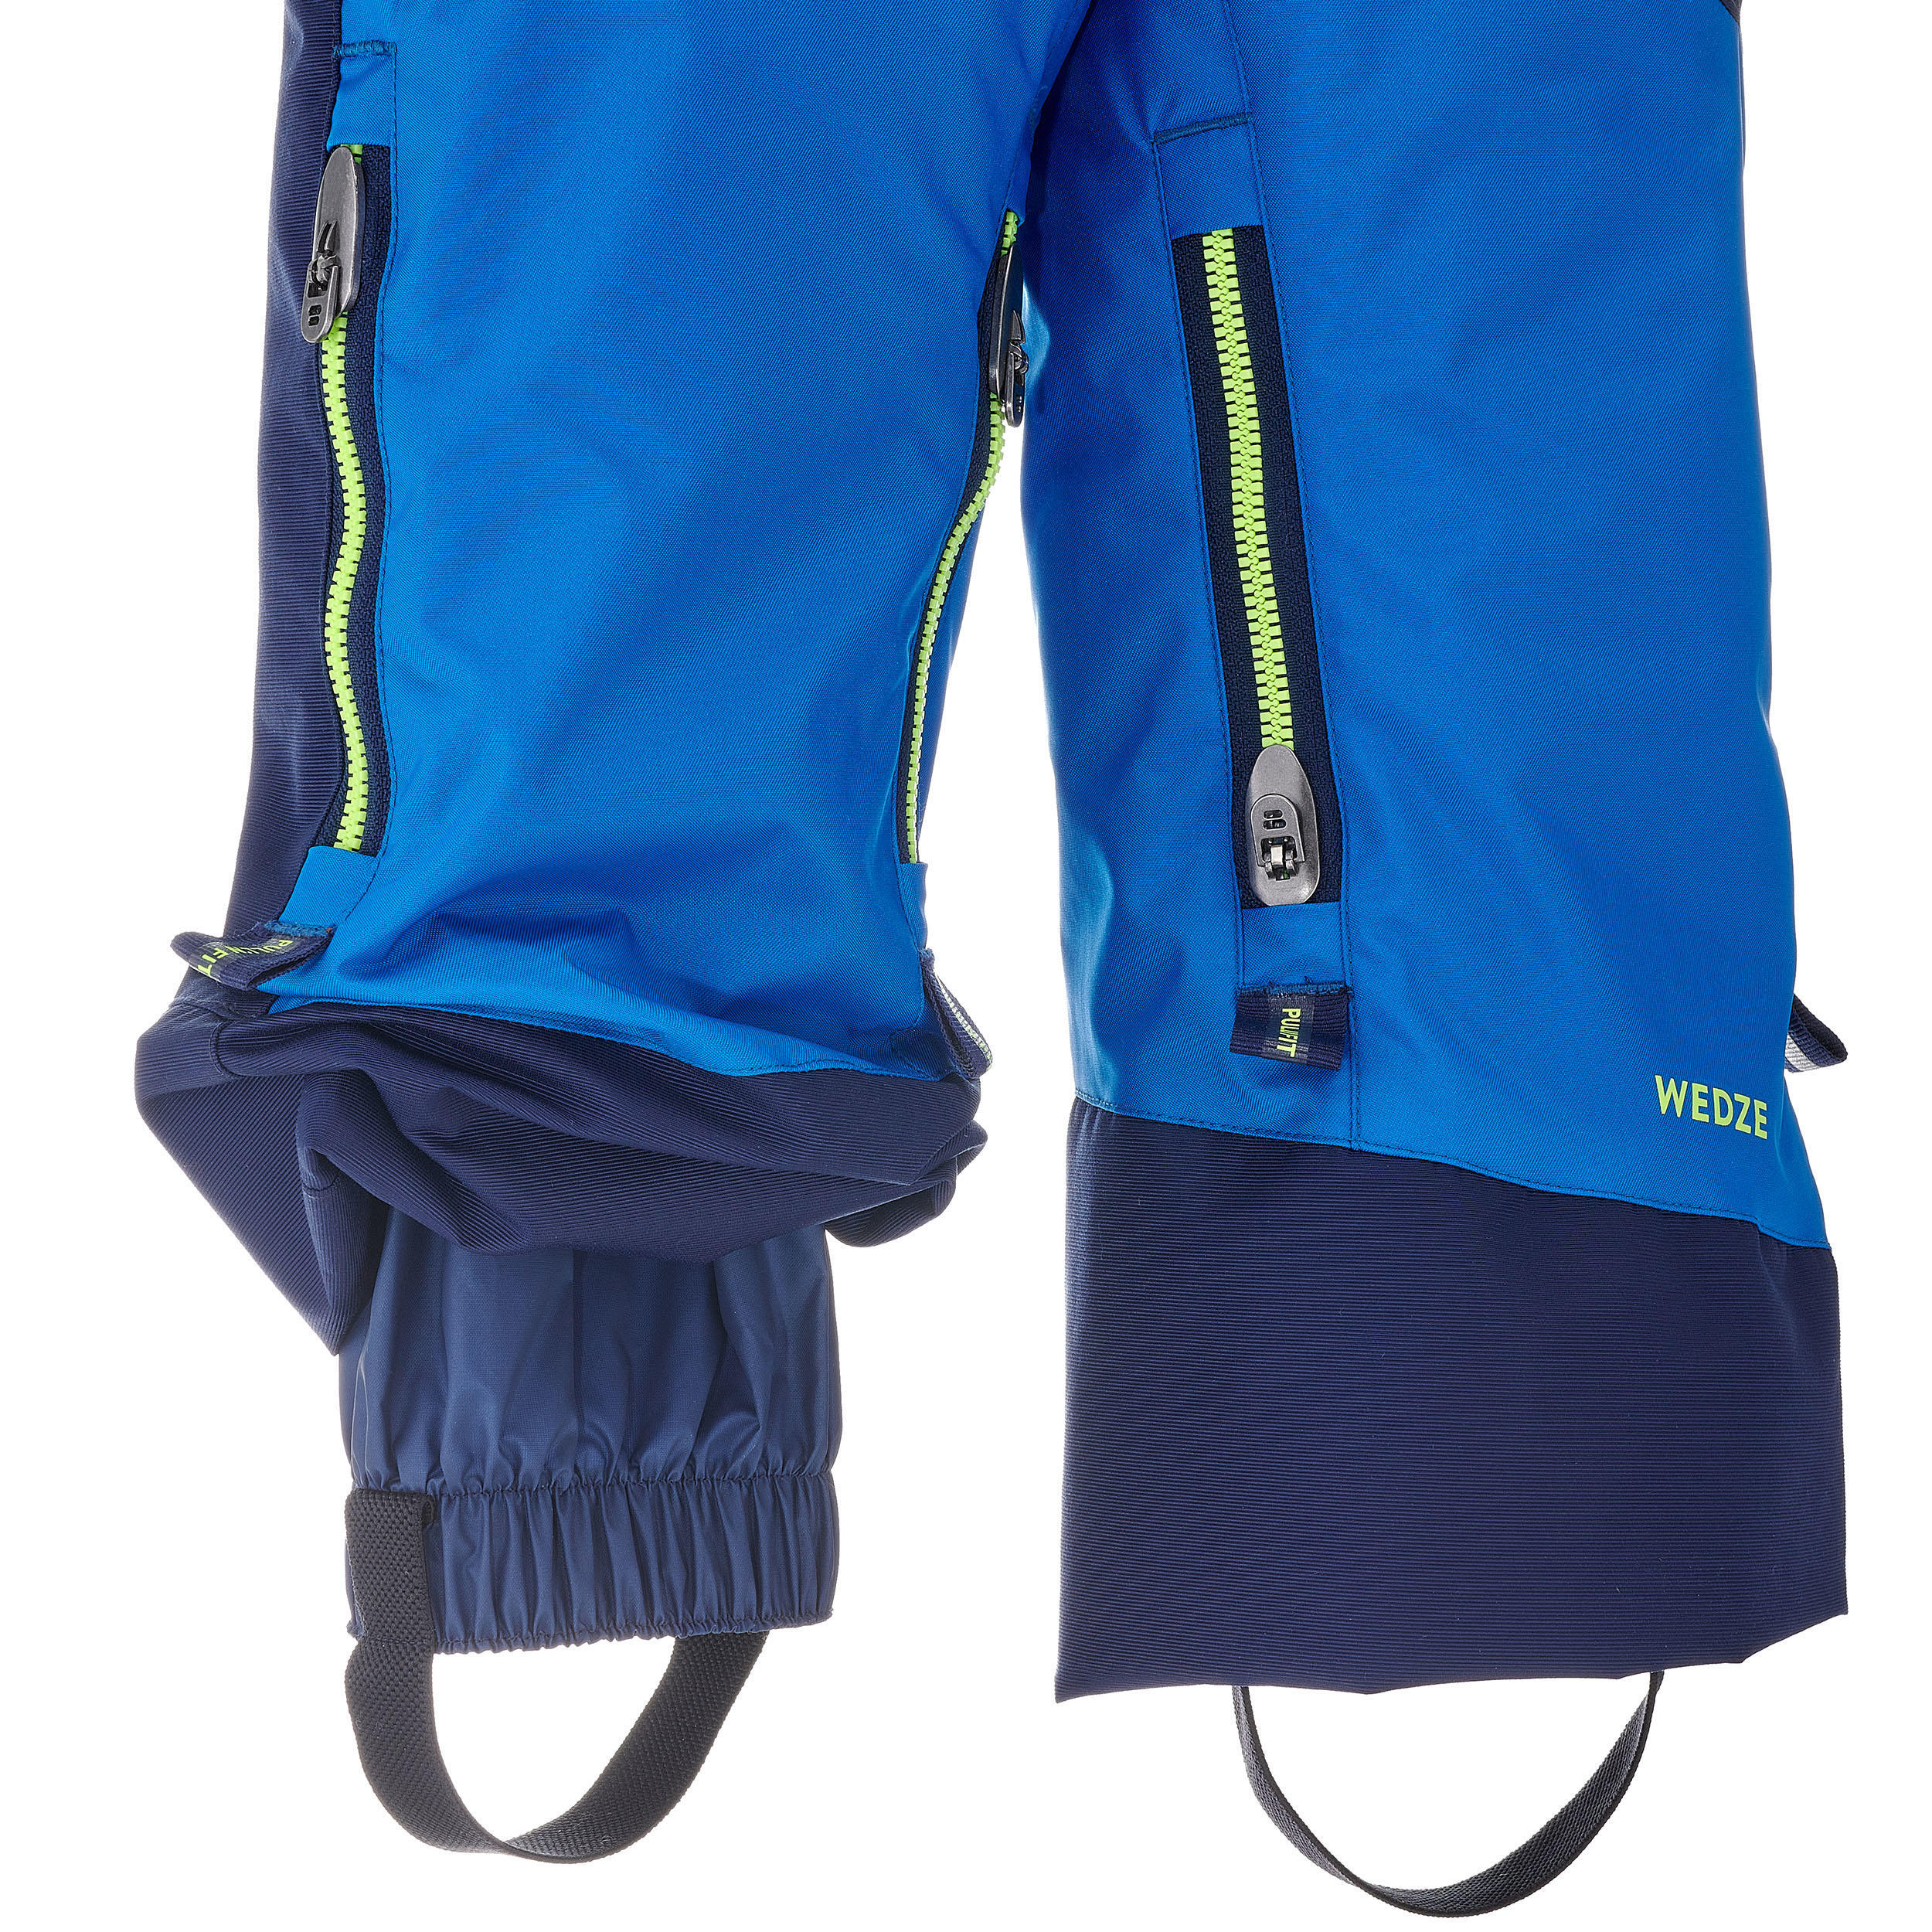 Kids’ Warm and Waterproof Ski Suit 580 - Blue 12/19